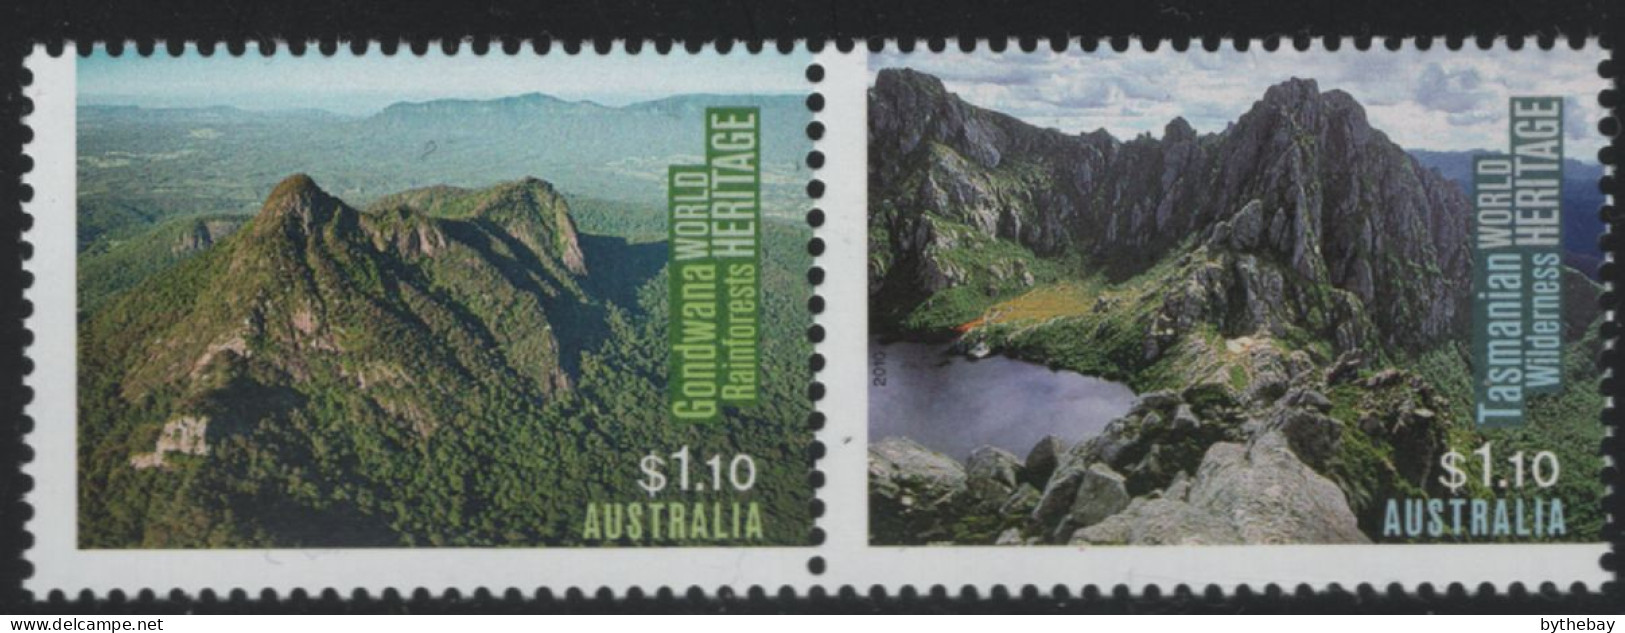 Australia 2010 MNH Sc 3267a $1.10 Gondwana, Tasmania UNESCO - Mint Stamps